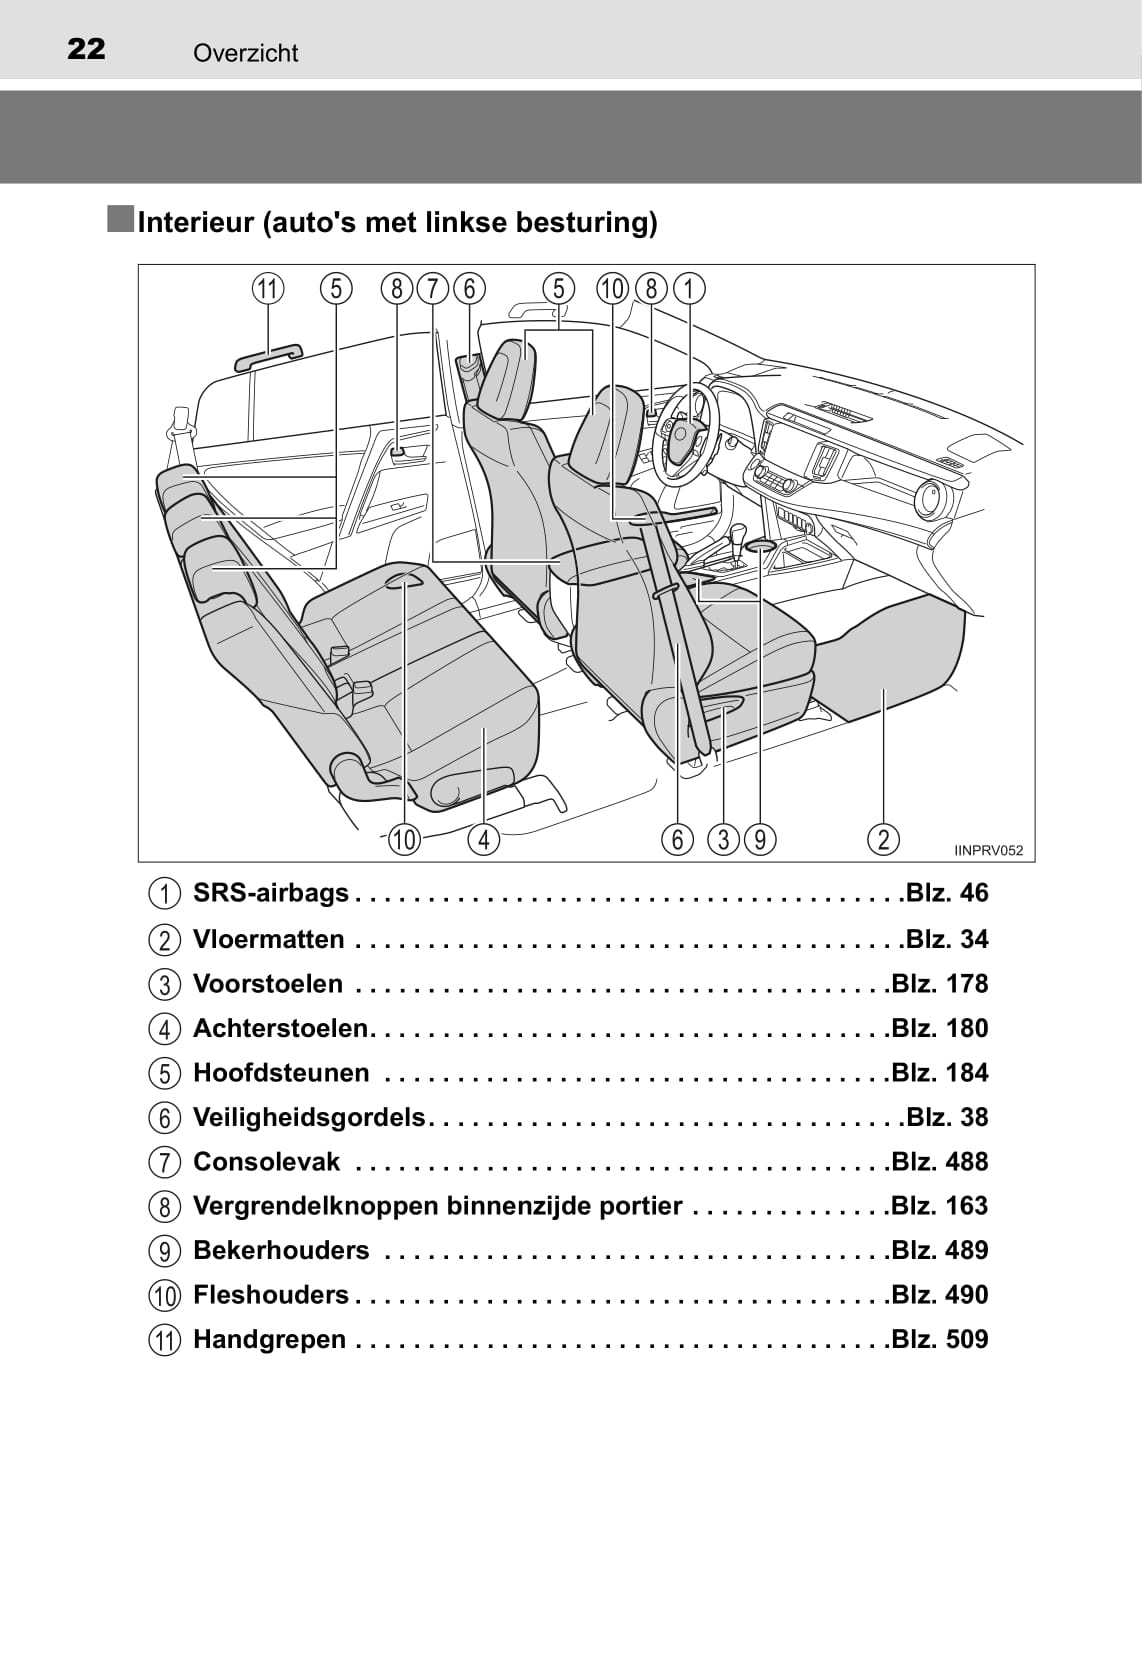 2015-2016 Toyota RAV4 Gebruikershandleiding | Nederlands